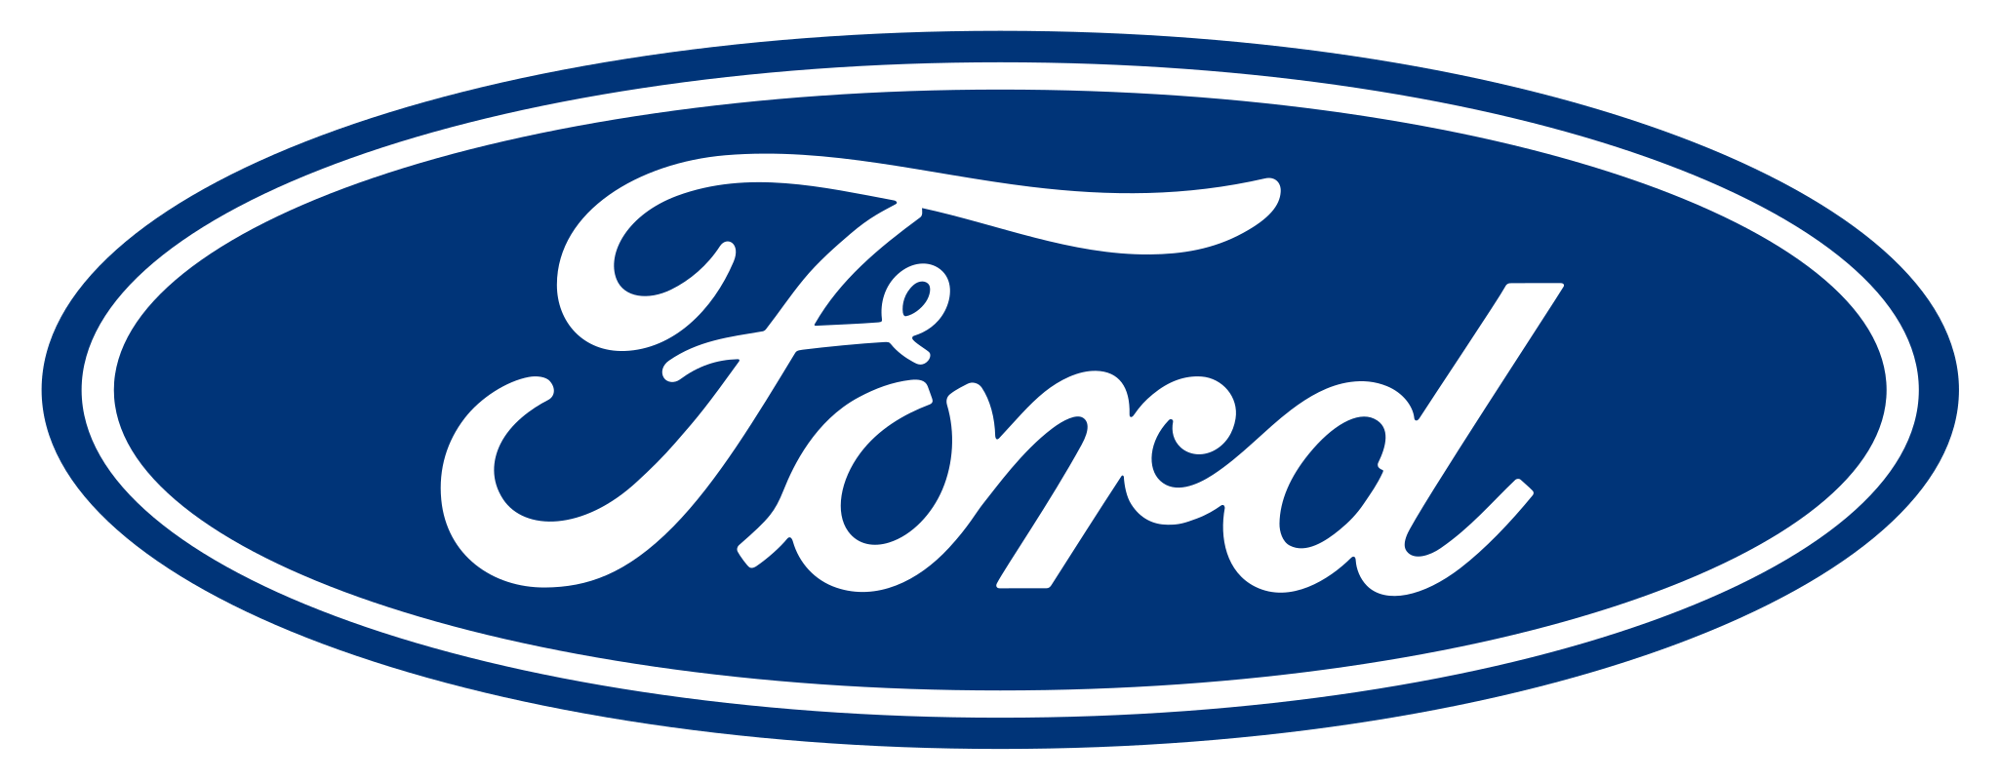 ford-logo-2017